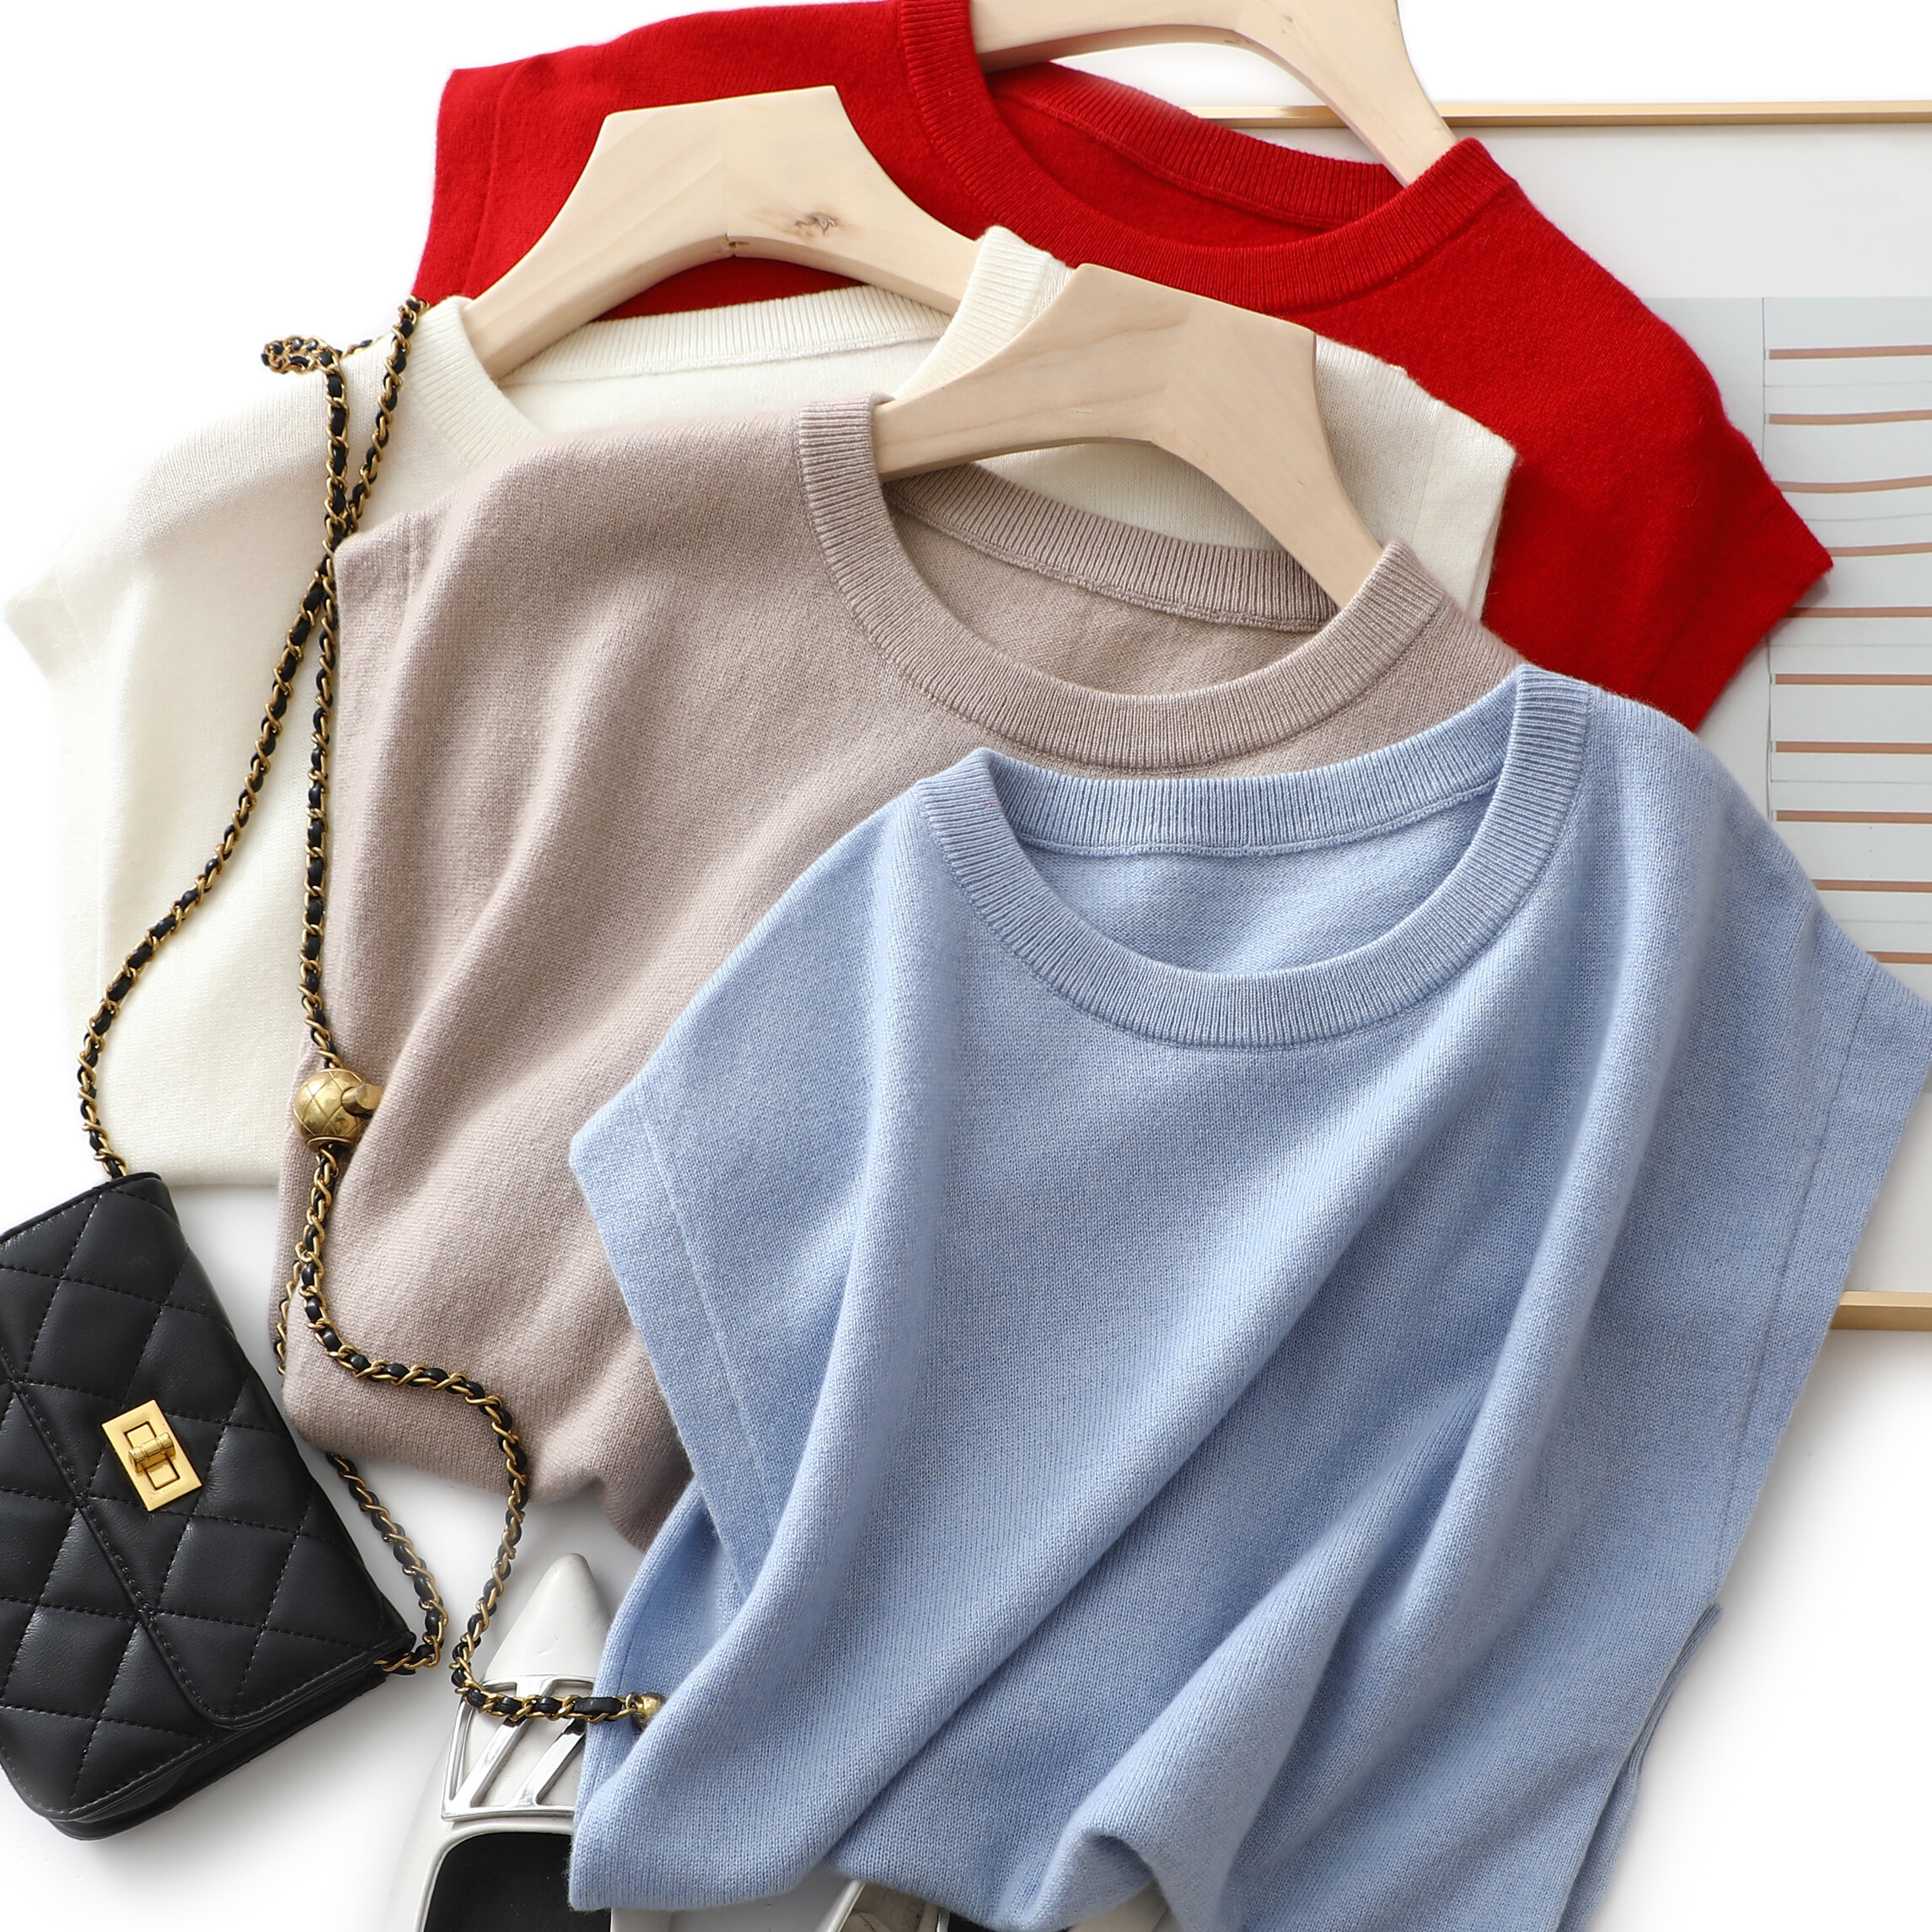 Monochrome Cashmere, Round Neck Sleeveless Cashmere, Women Knit Vest, Cashmere Sweater